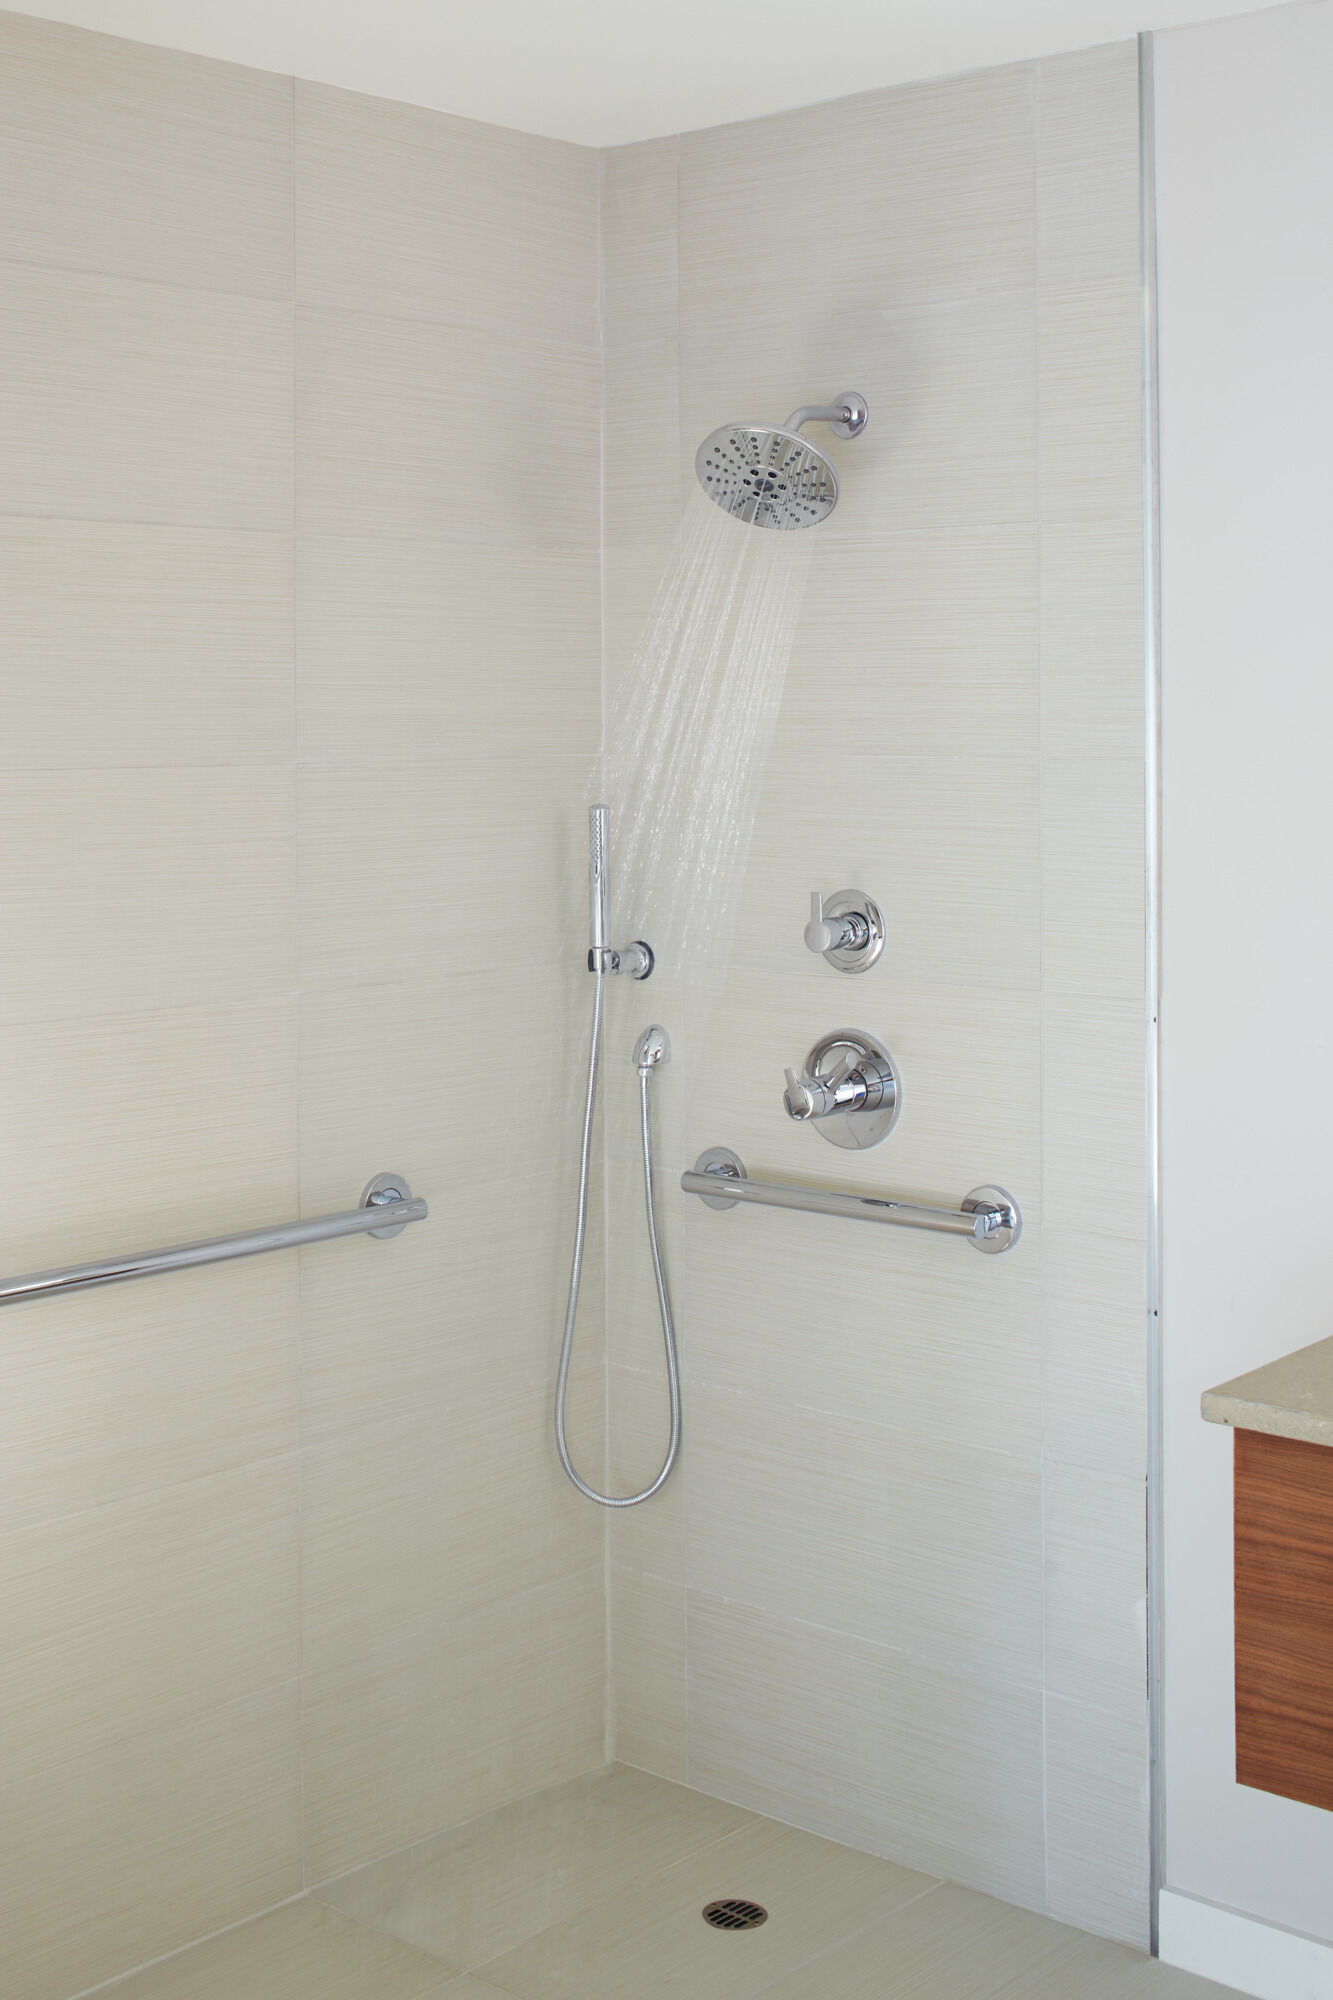 Chrome Wall Mounted Bathroom Shower Holder Bracket Handheld Shower Head Holder l 